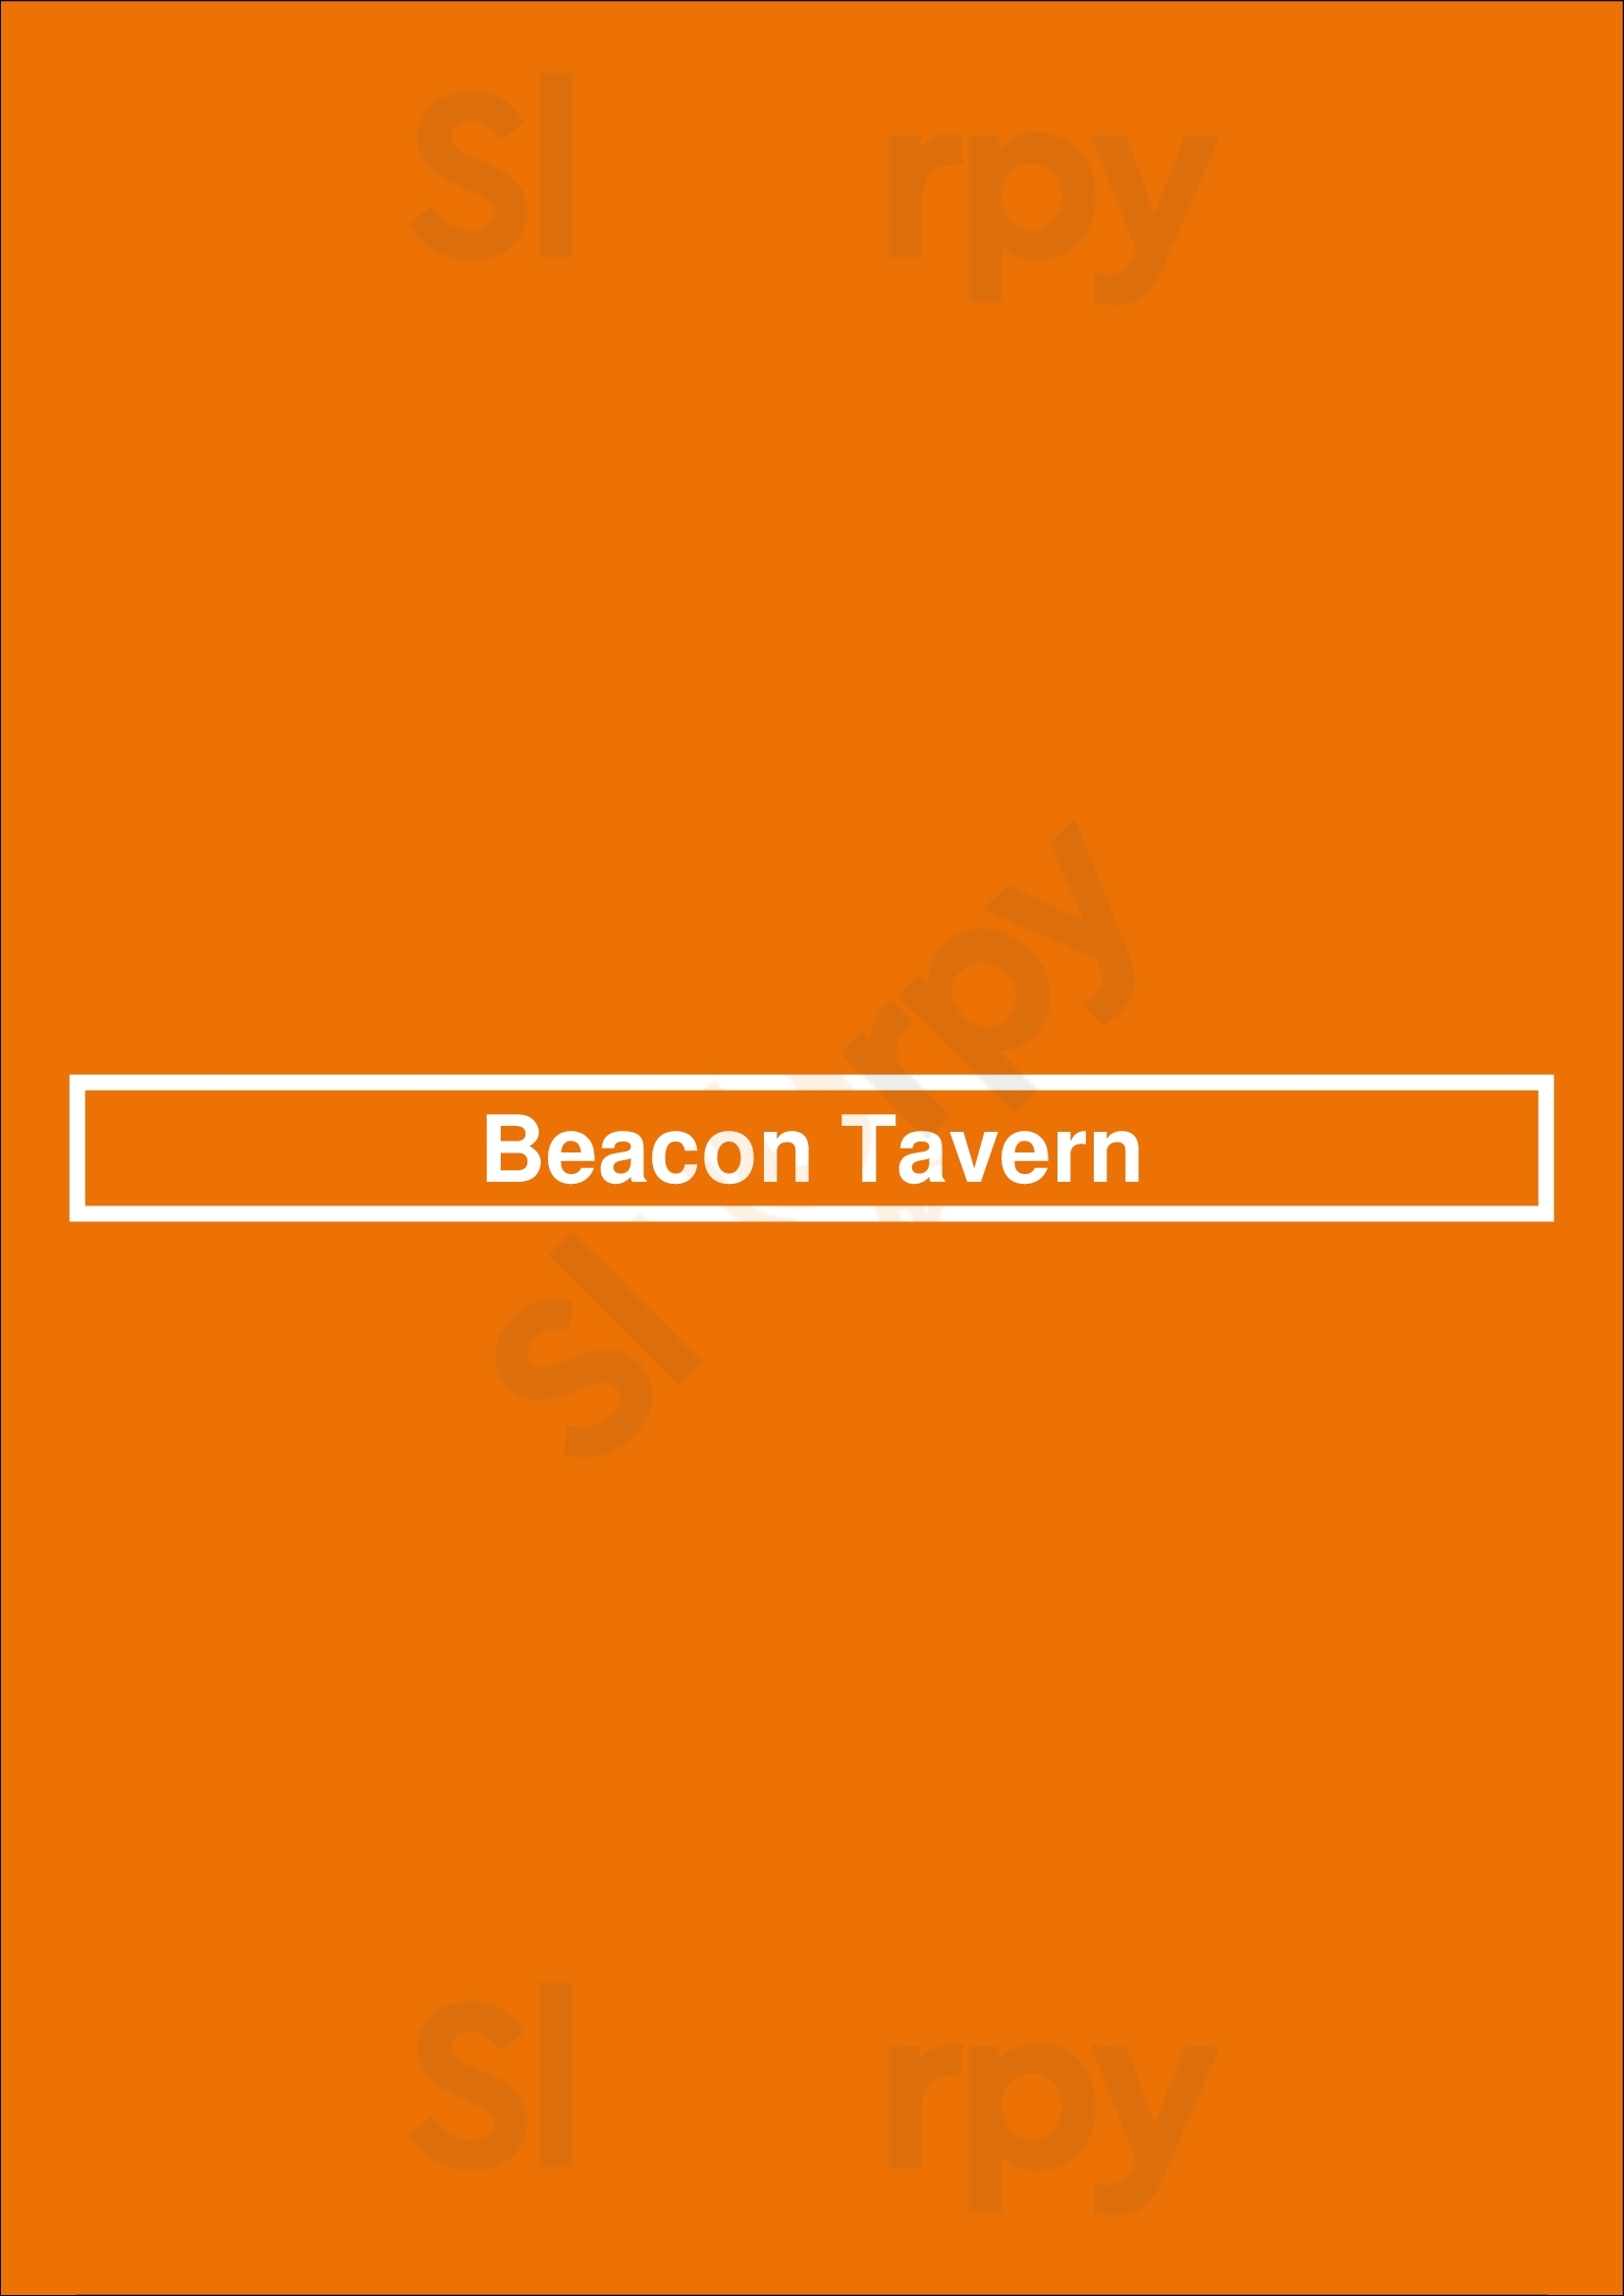 Beacon Tavern Chicago Menu - 1